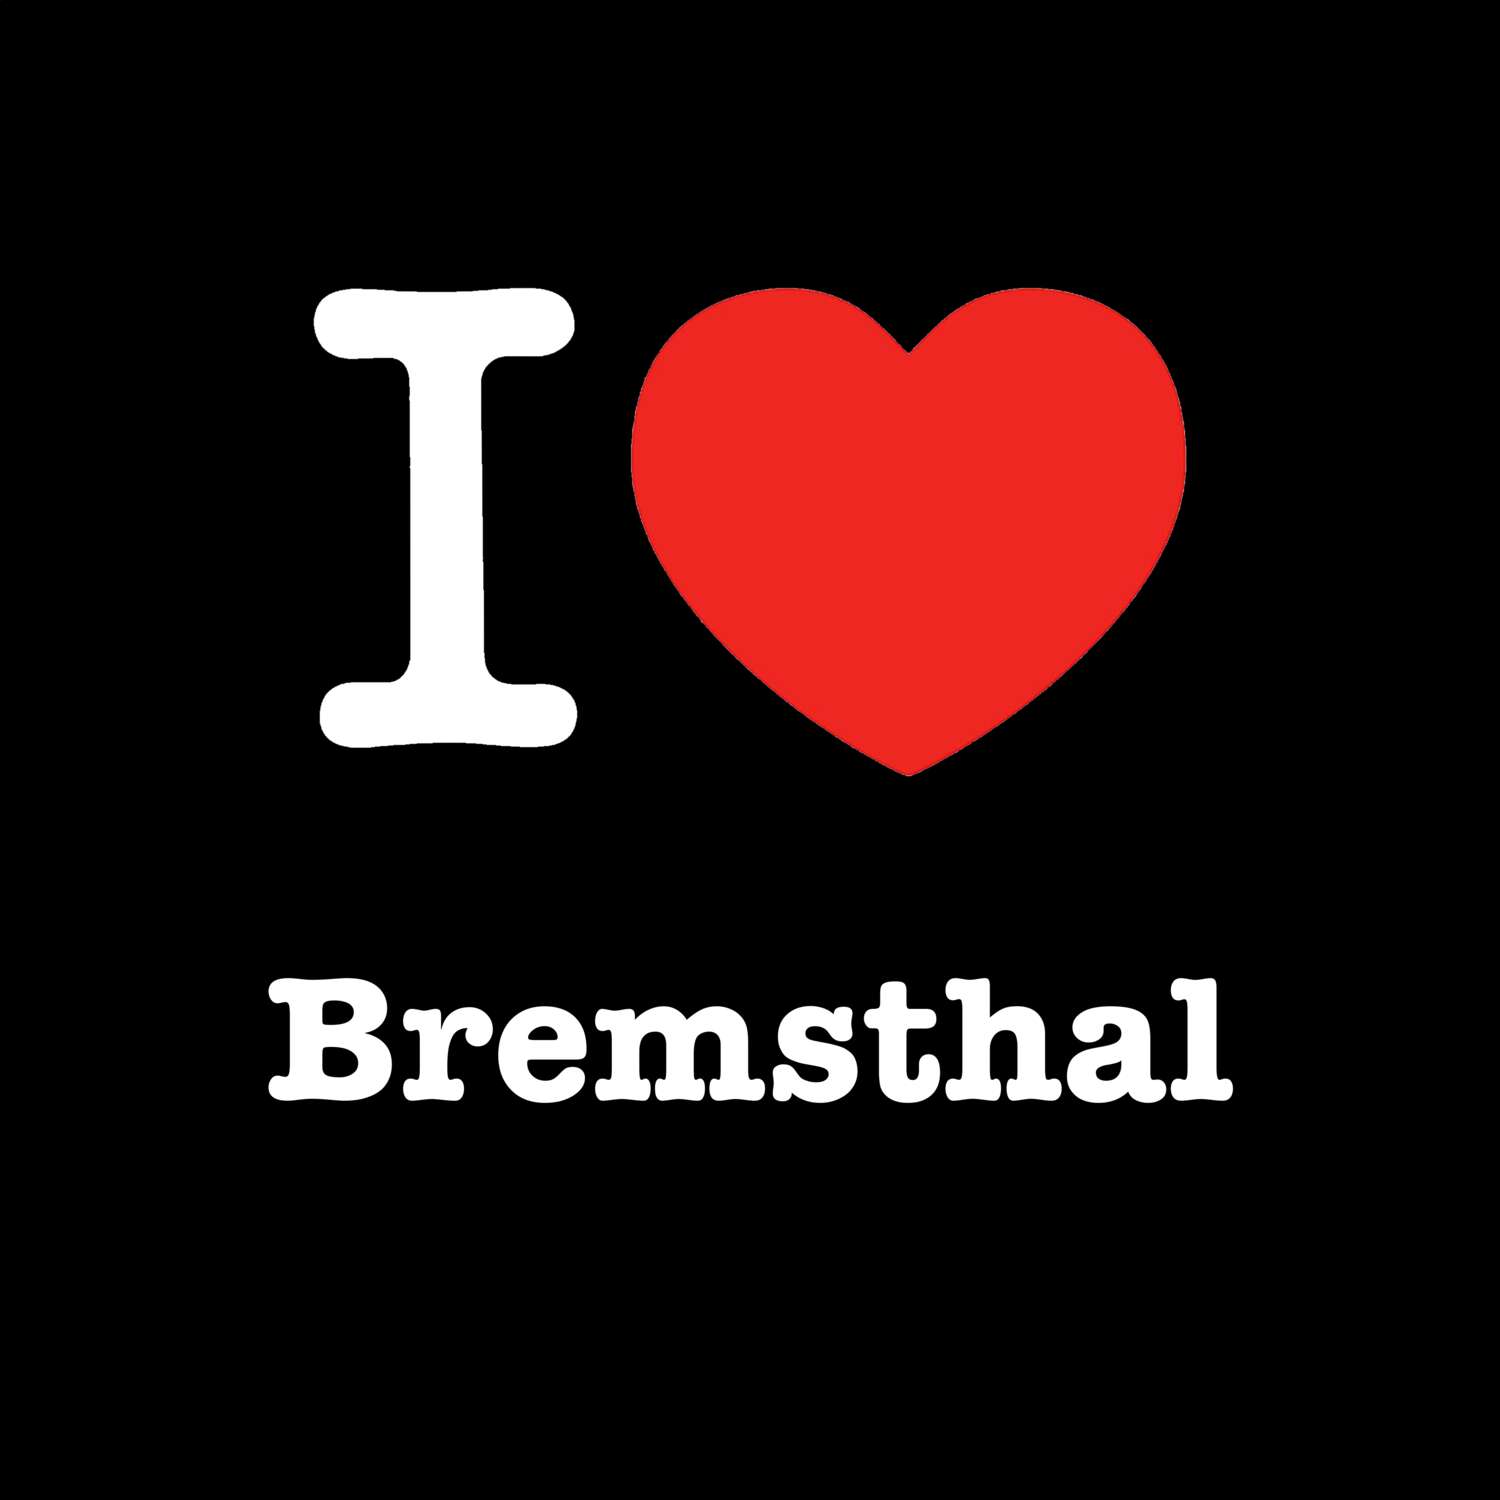 Bremsthal T-Shirt »I love«